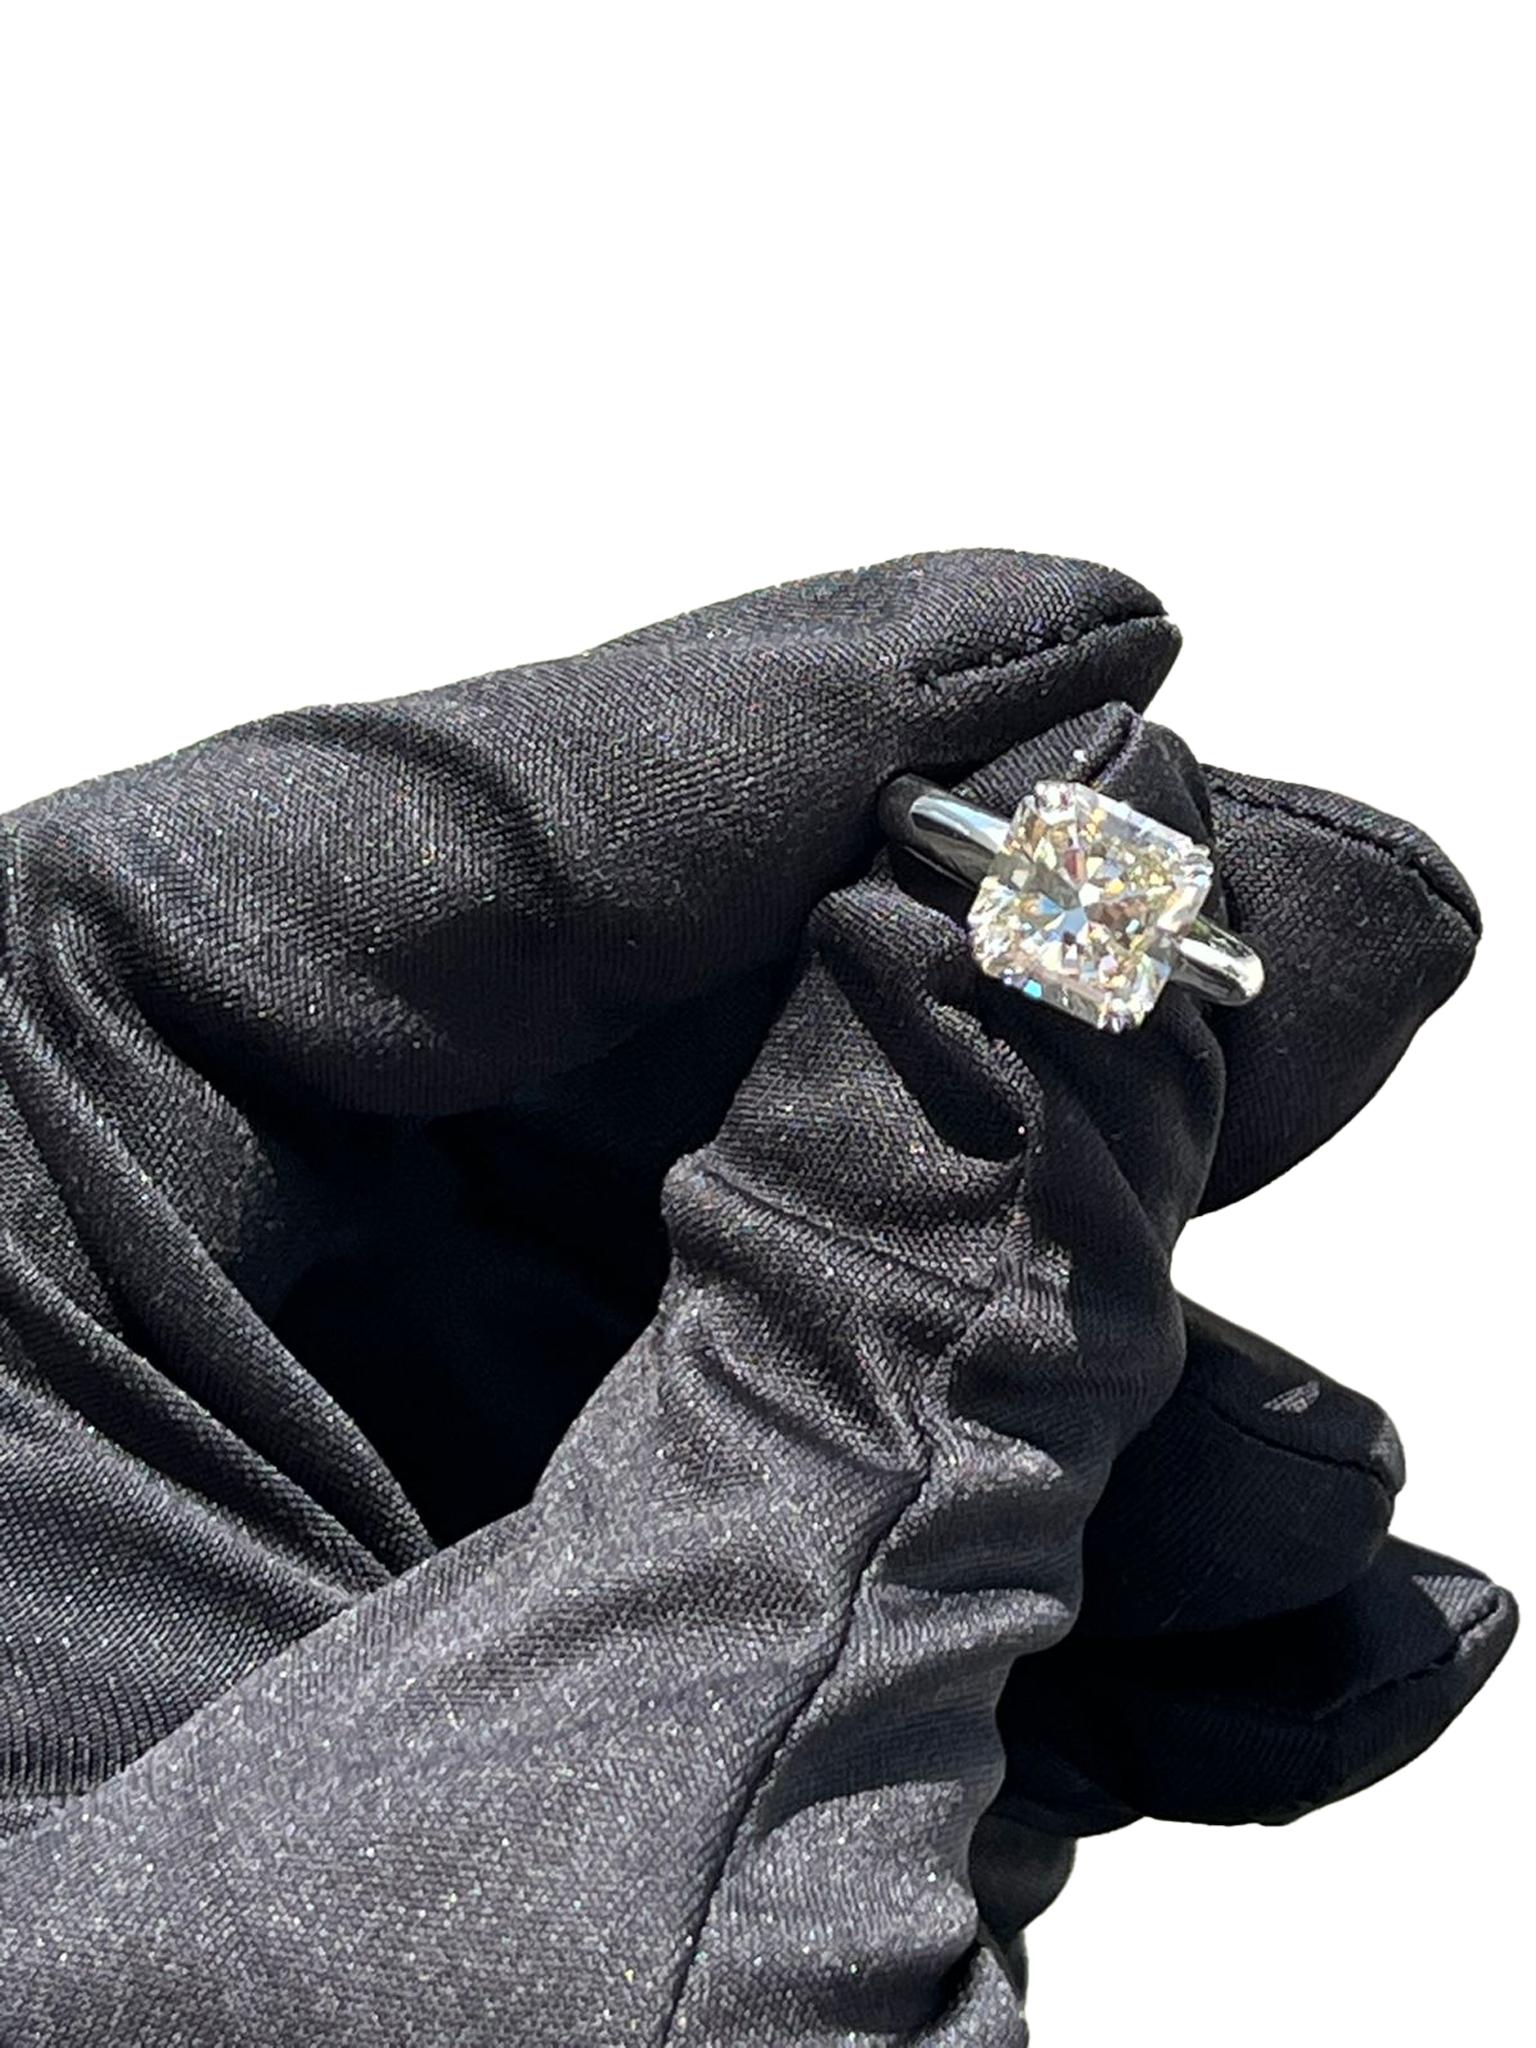 4.28 Carat Natural Square Radiant Cut Diamond Engagement Ring in Platinum For Sale 9